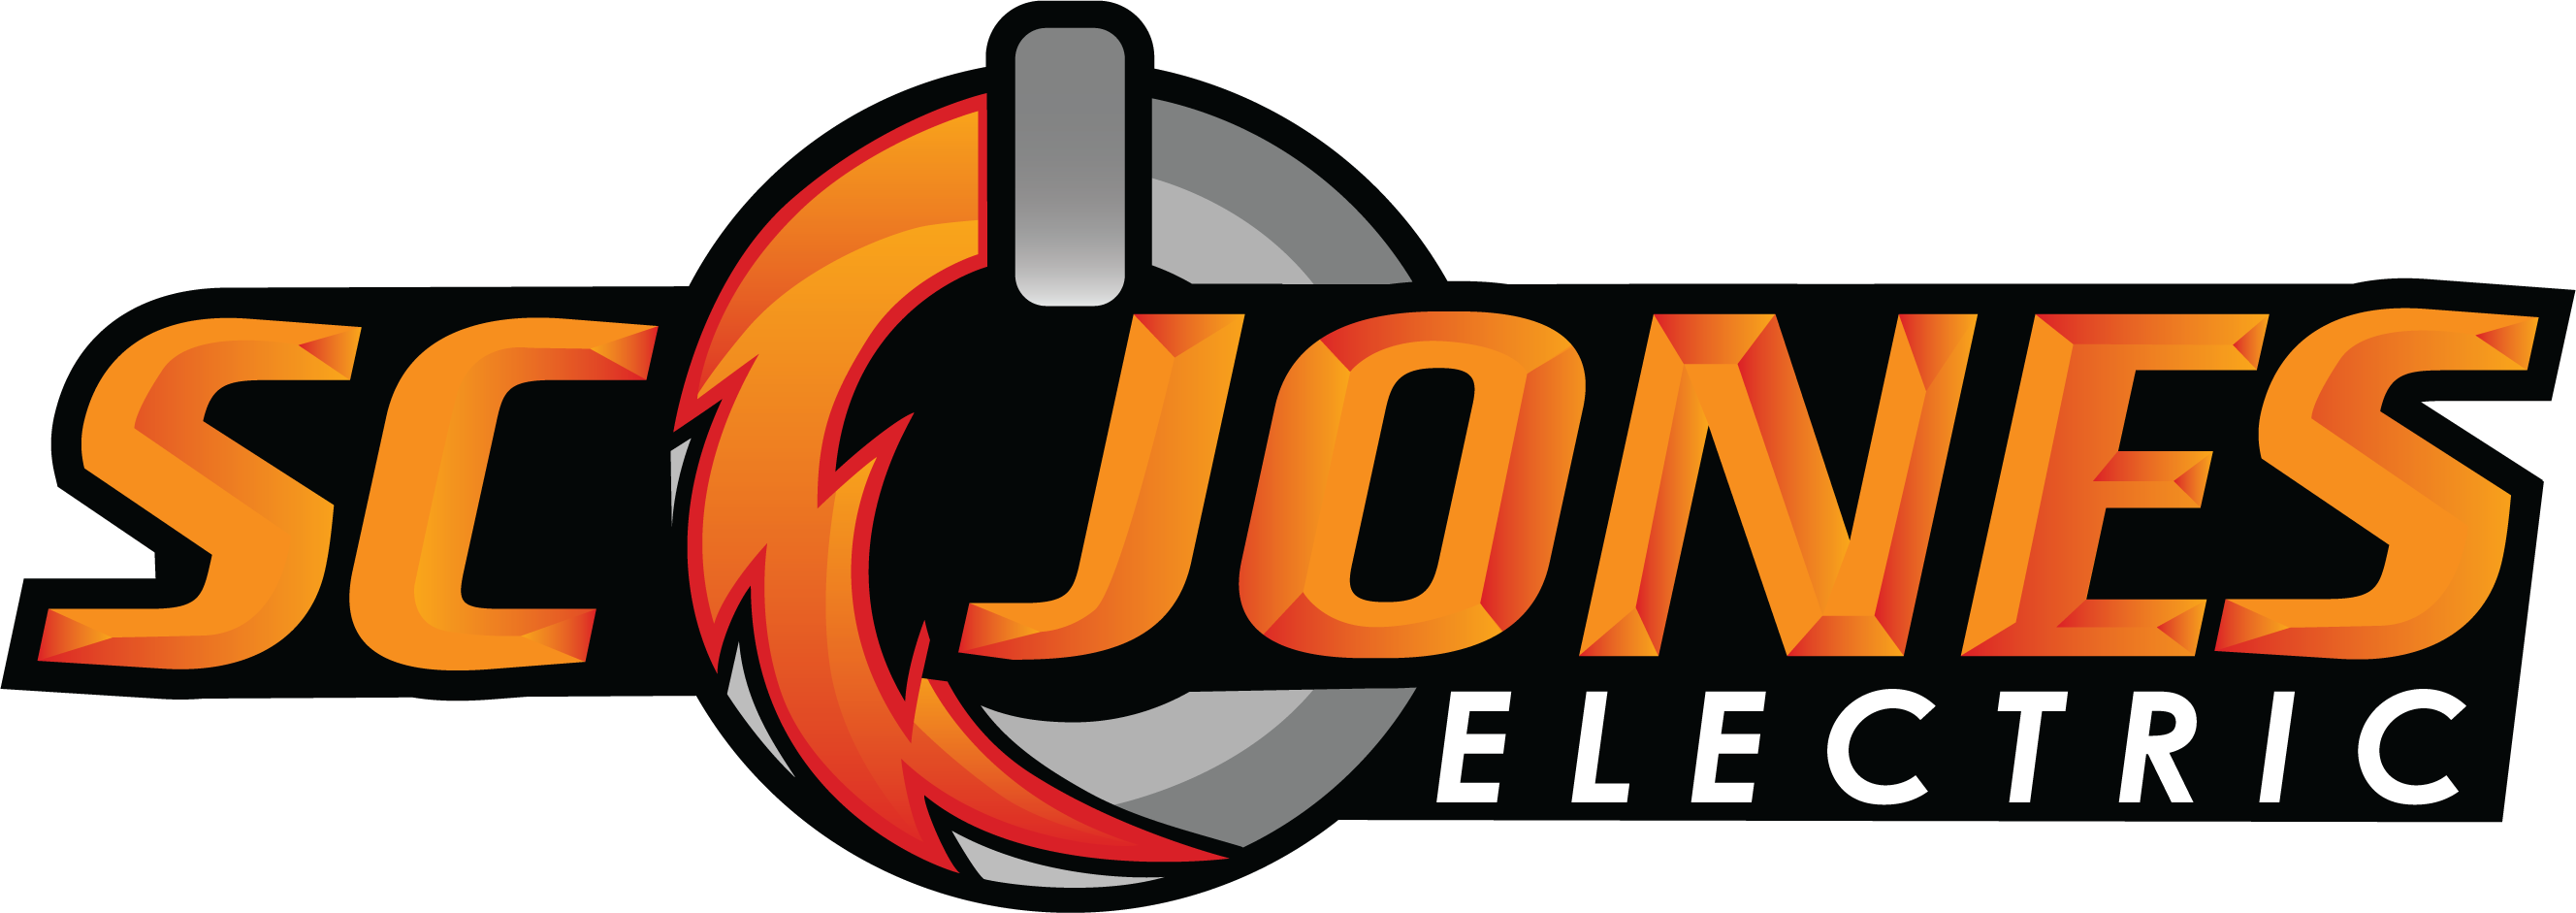 SC Jones Electric, LLC Logo